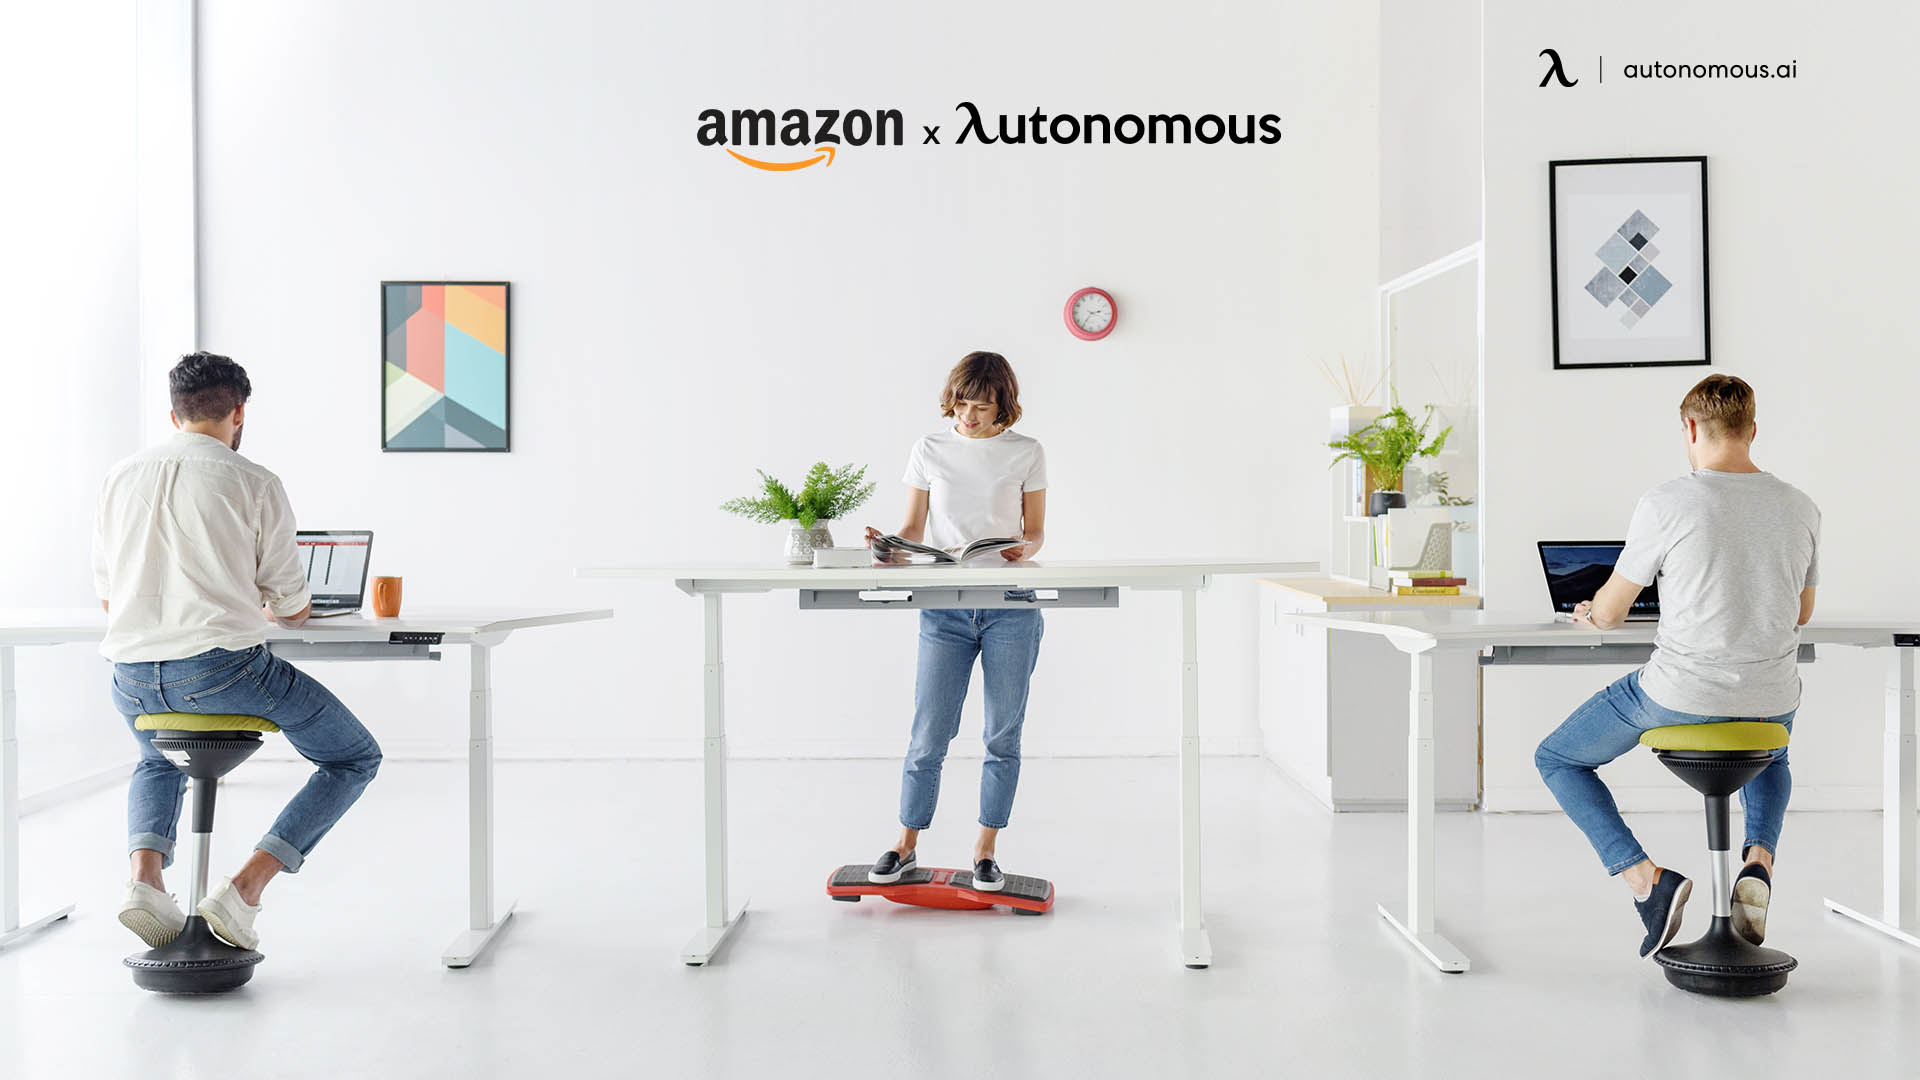 Amazon Employee Discount Program by Autonomous